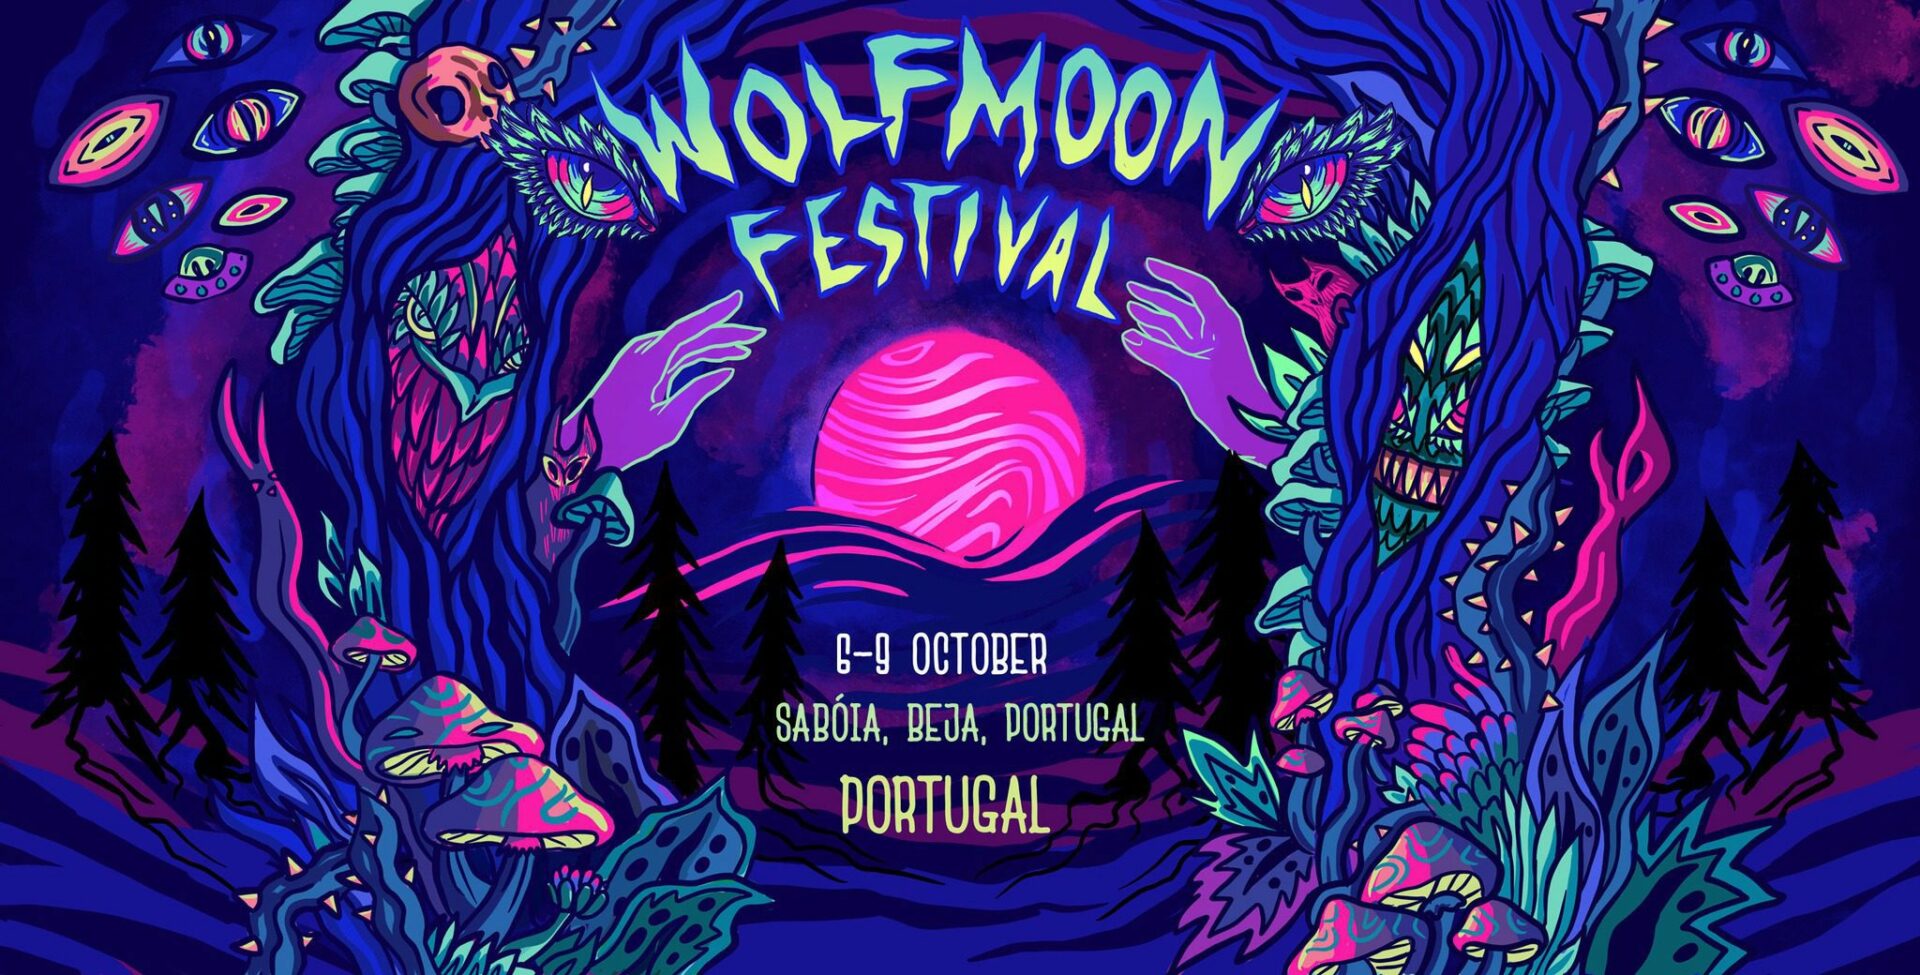 Wolfmoon Festival